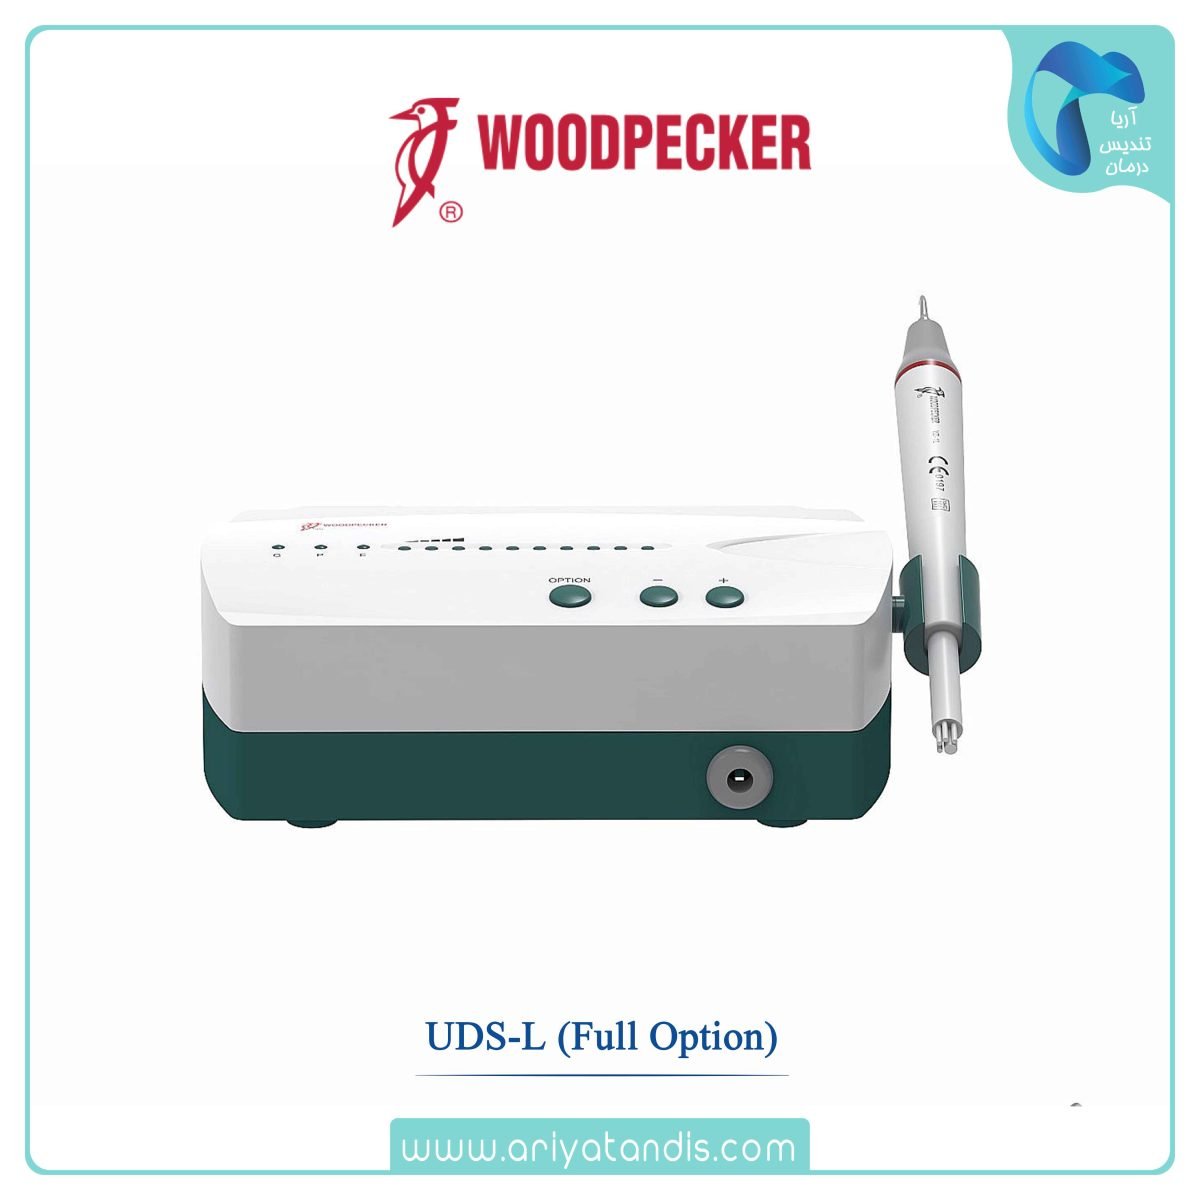 (Woodpecker – UDS-L (Full Option